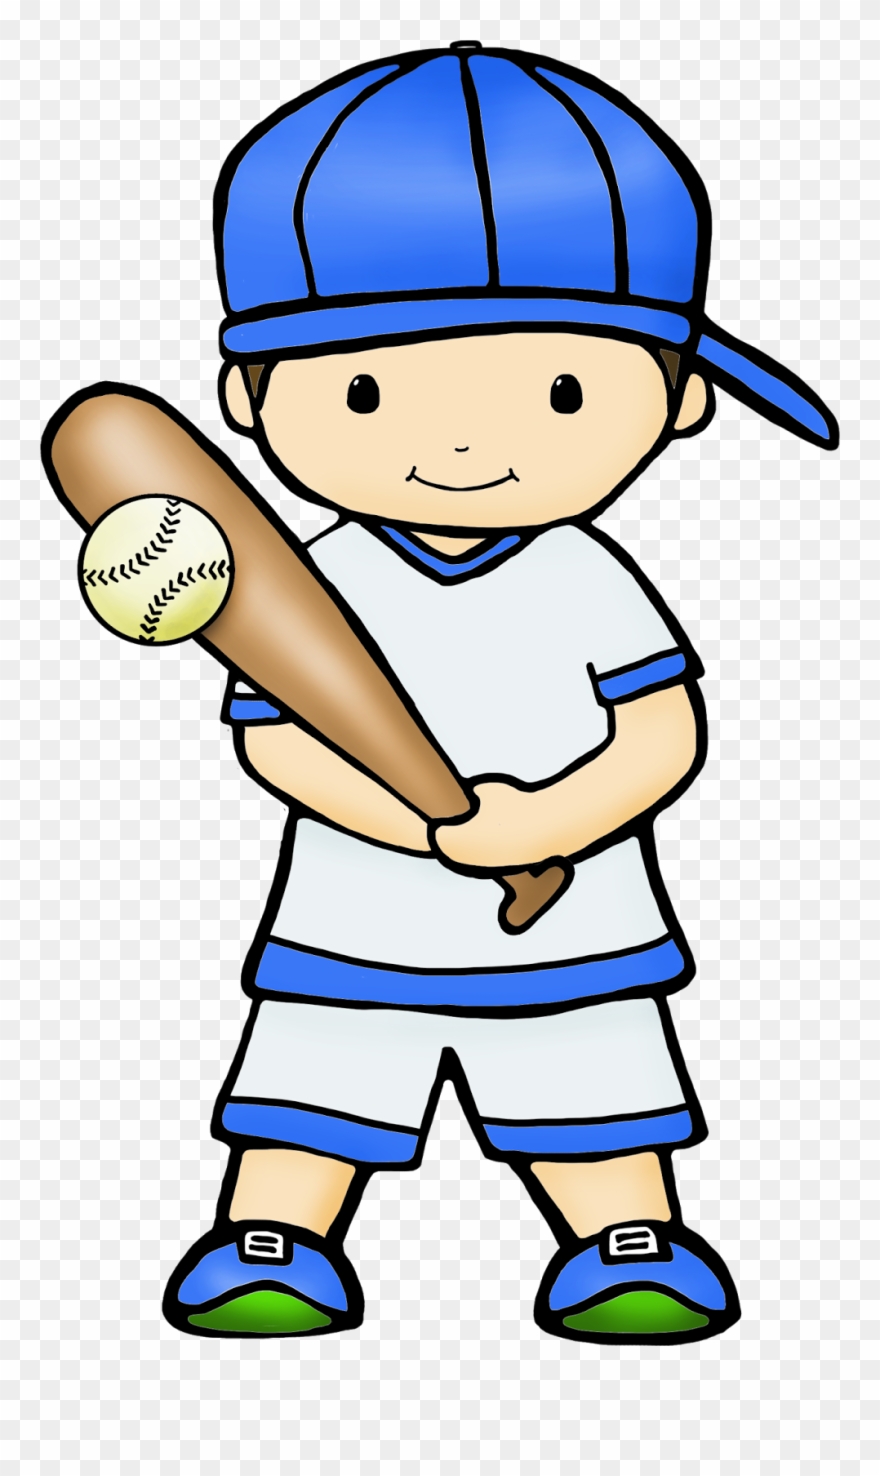 Free Baseball Kids Clipart, Download Free Baseball Kids Clipart png